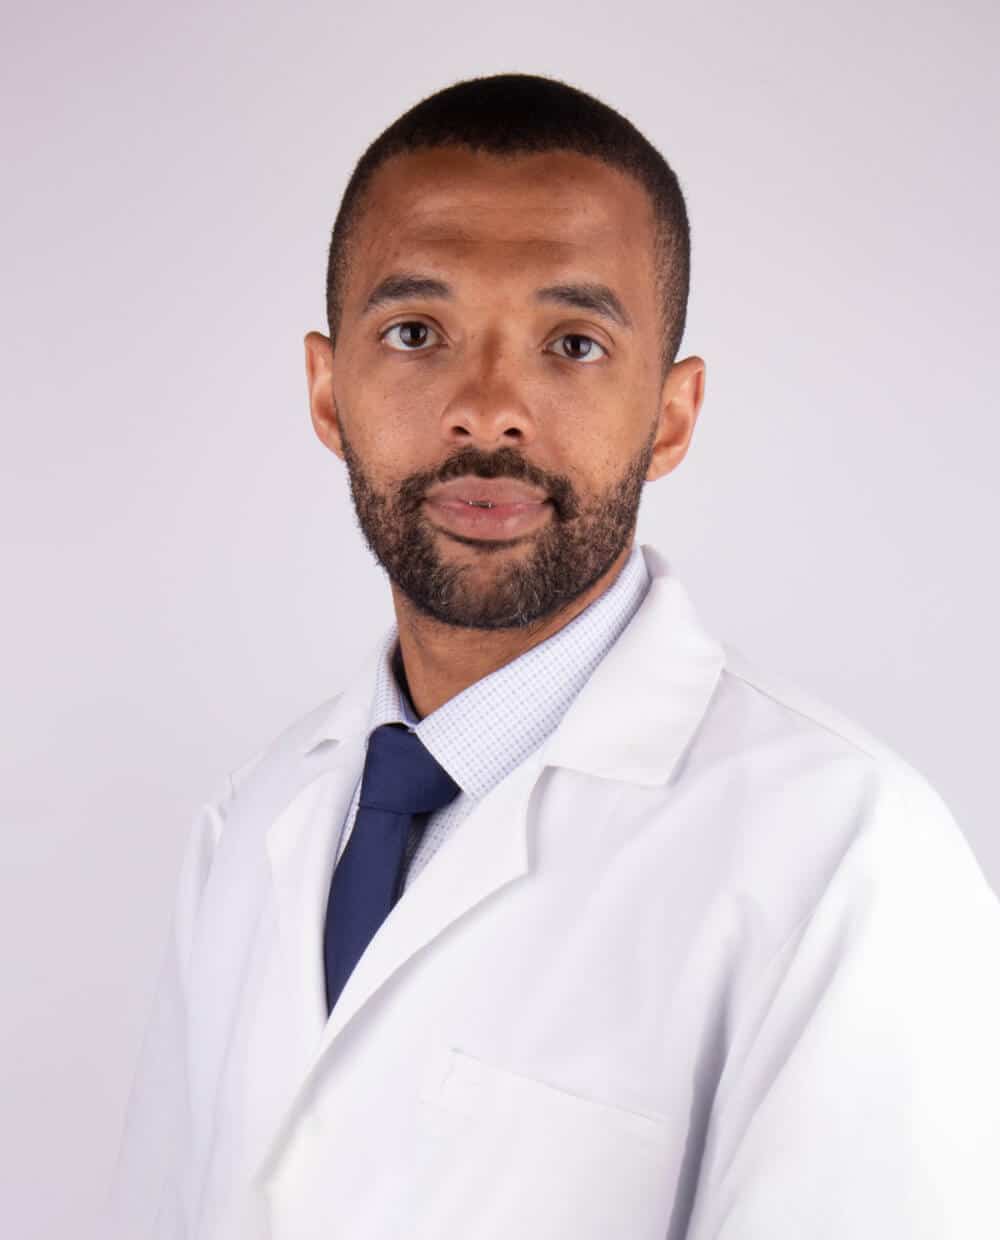 Dashiel Carr Doctor of Dental Surgery